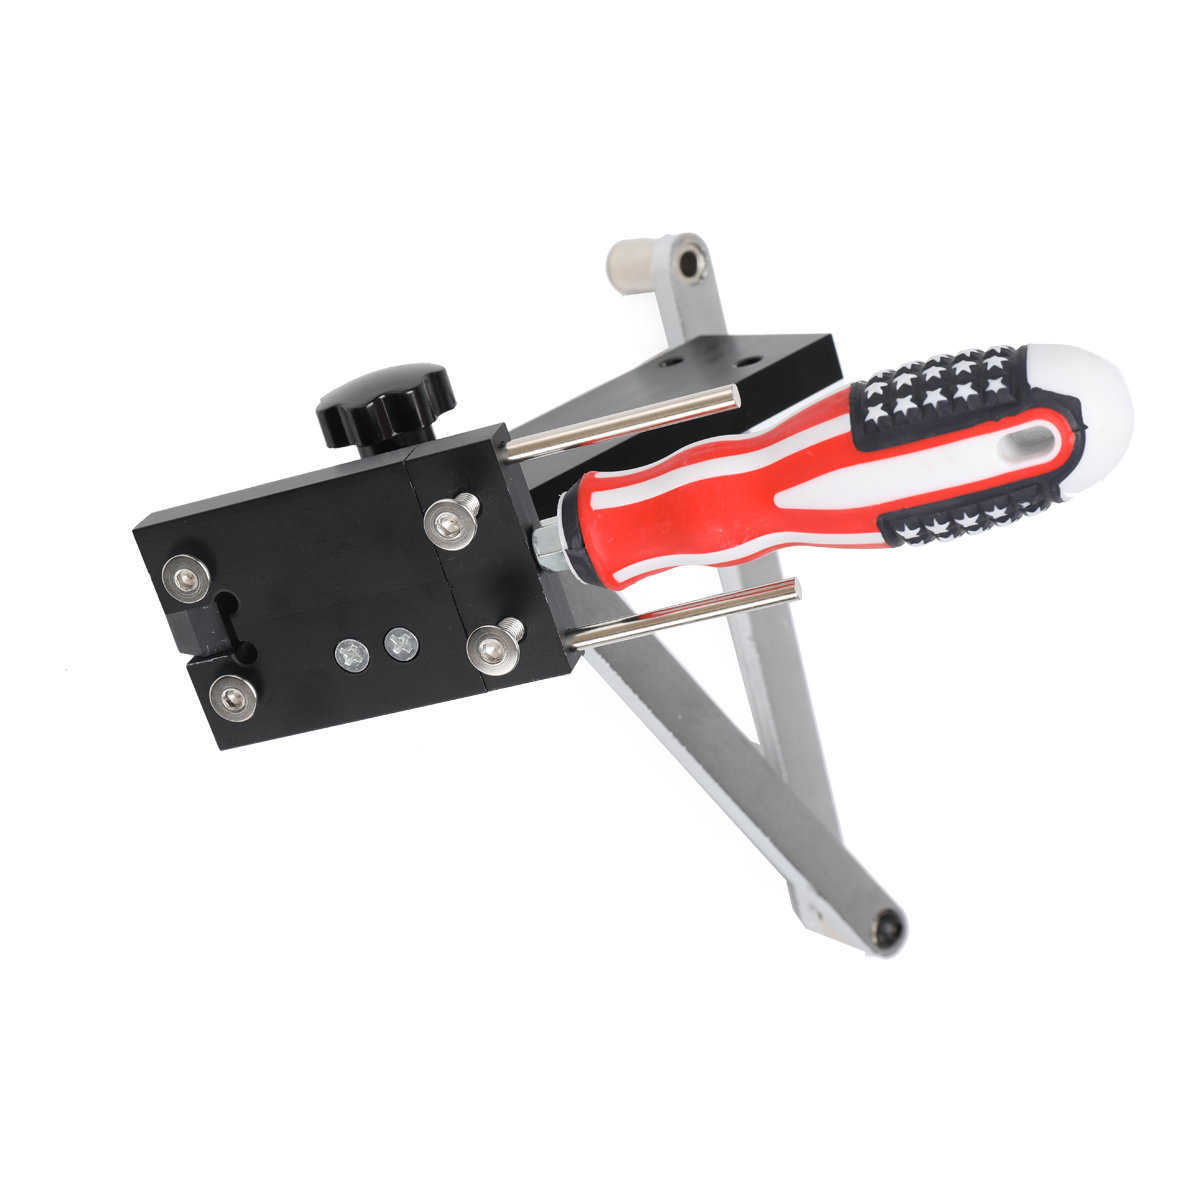 JOYDING Multifunction Electric Knife Sharpener Drill Bits Scissor